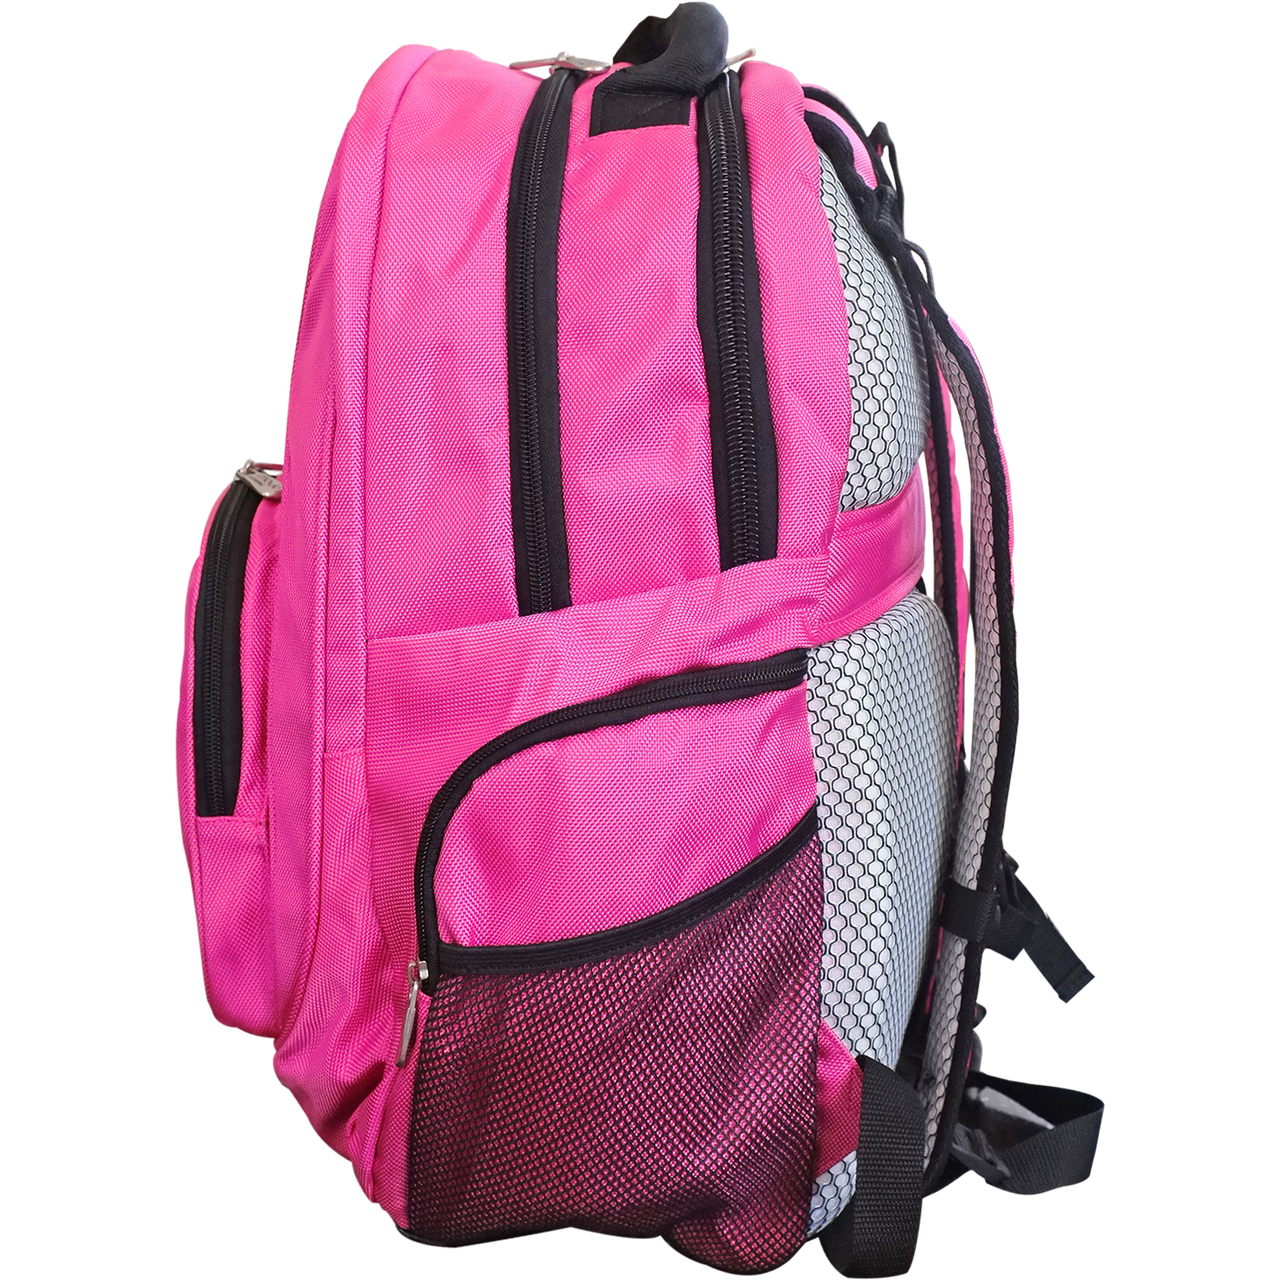 Minnesota Vikings Backpack | Minnesota Vikings Laptop Backpack- Pink